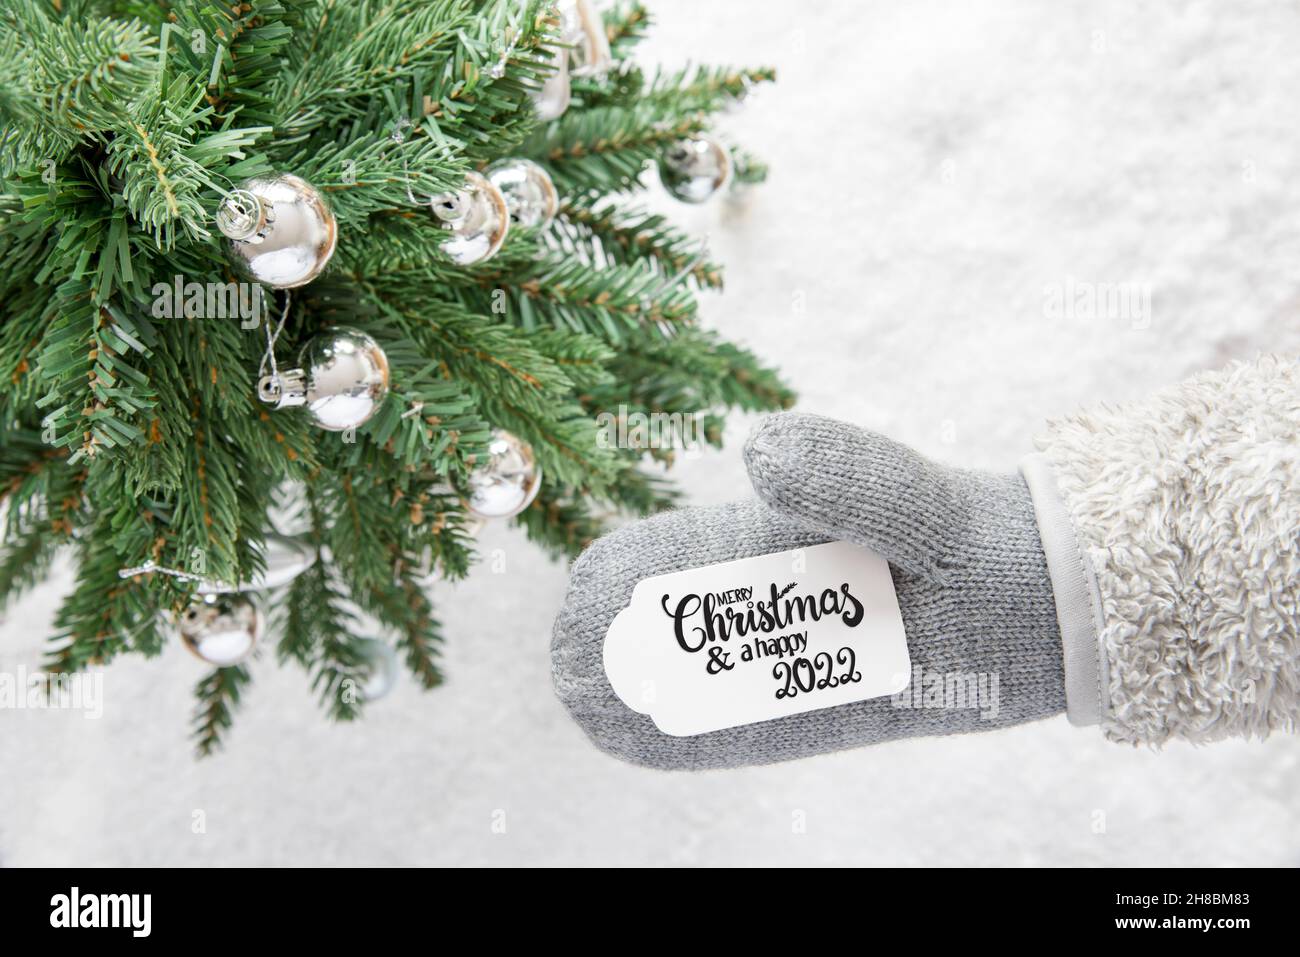 Gray Glove, Tree, Silver Ball, Merry Christmas And Happy 2022 Stock Photo